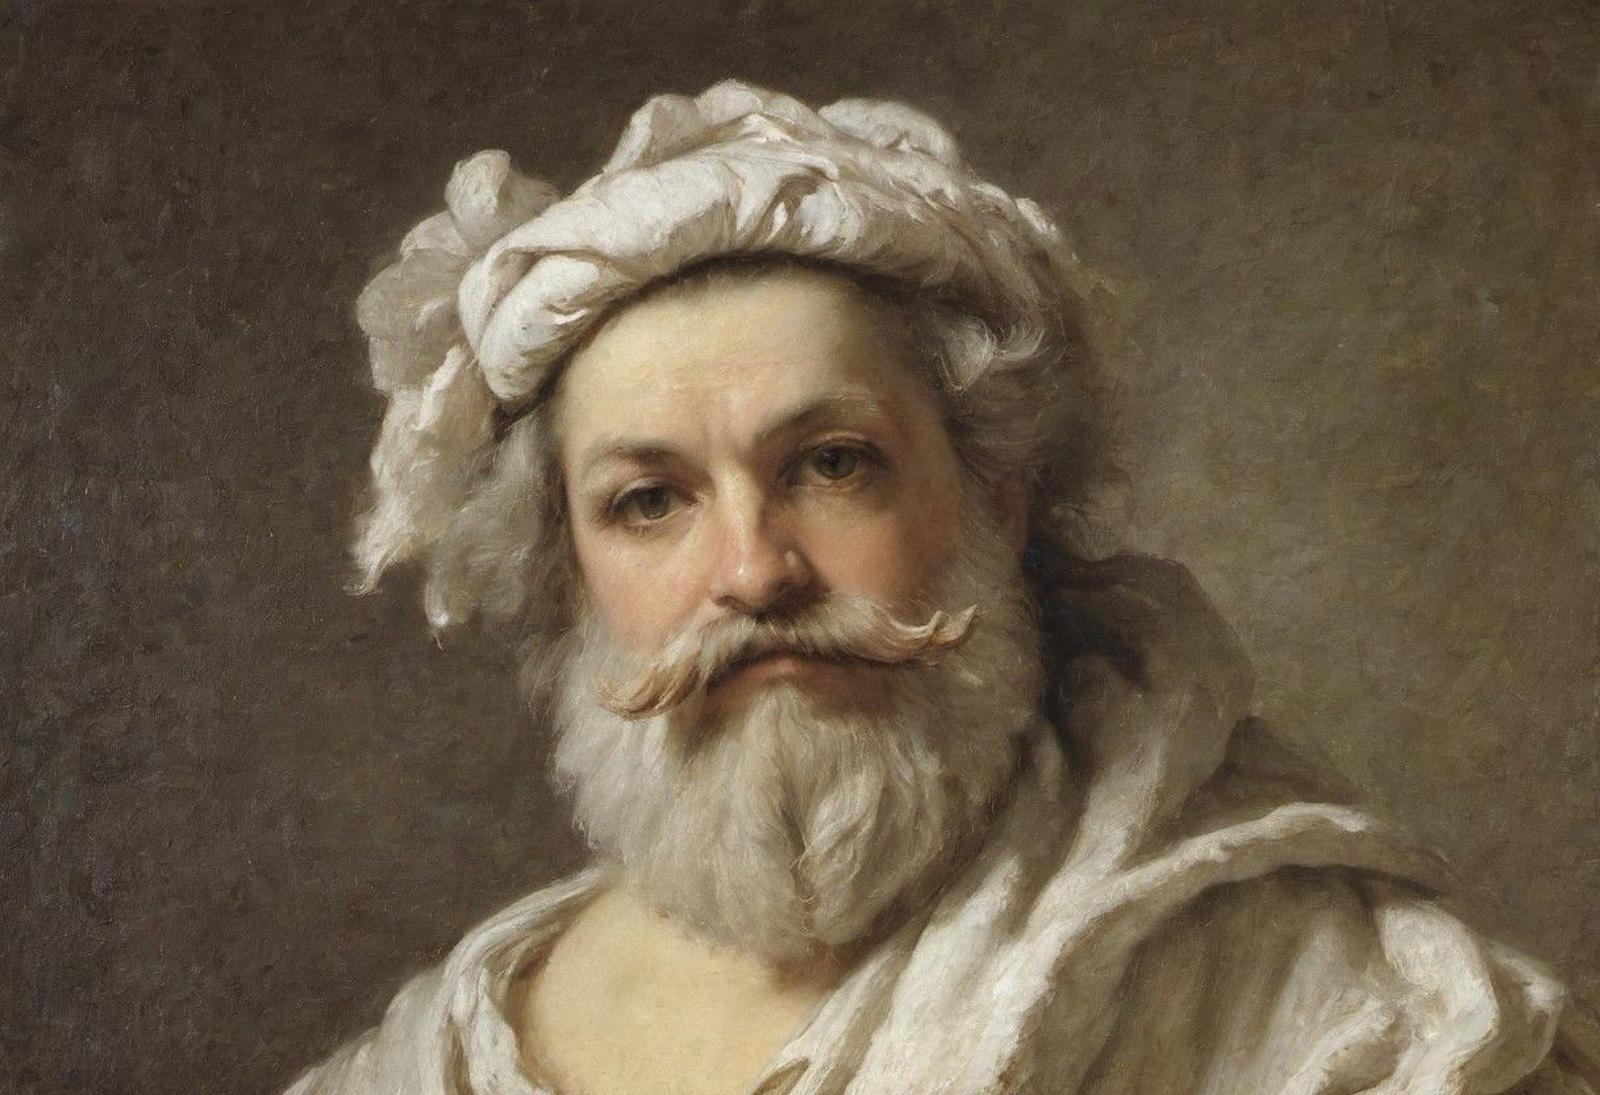 SDXL - Epic Beard, Mustache & Hair image by ArtHistorian